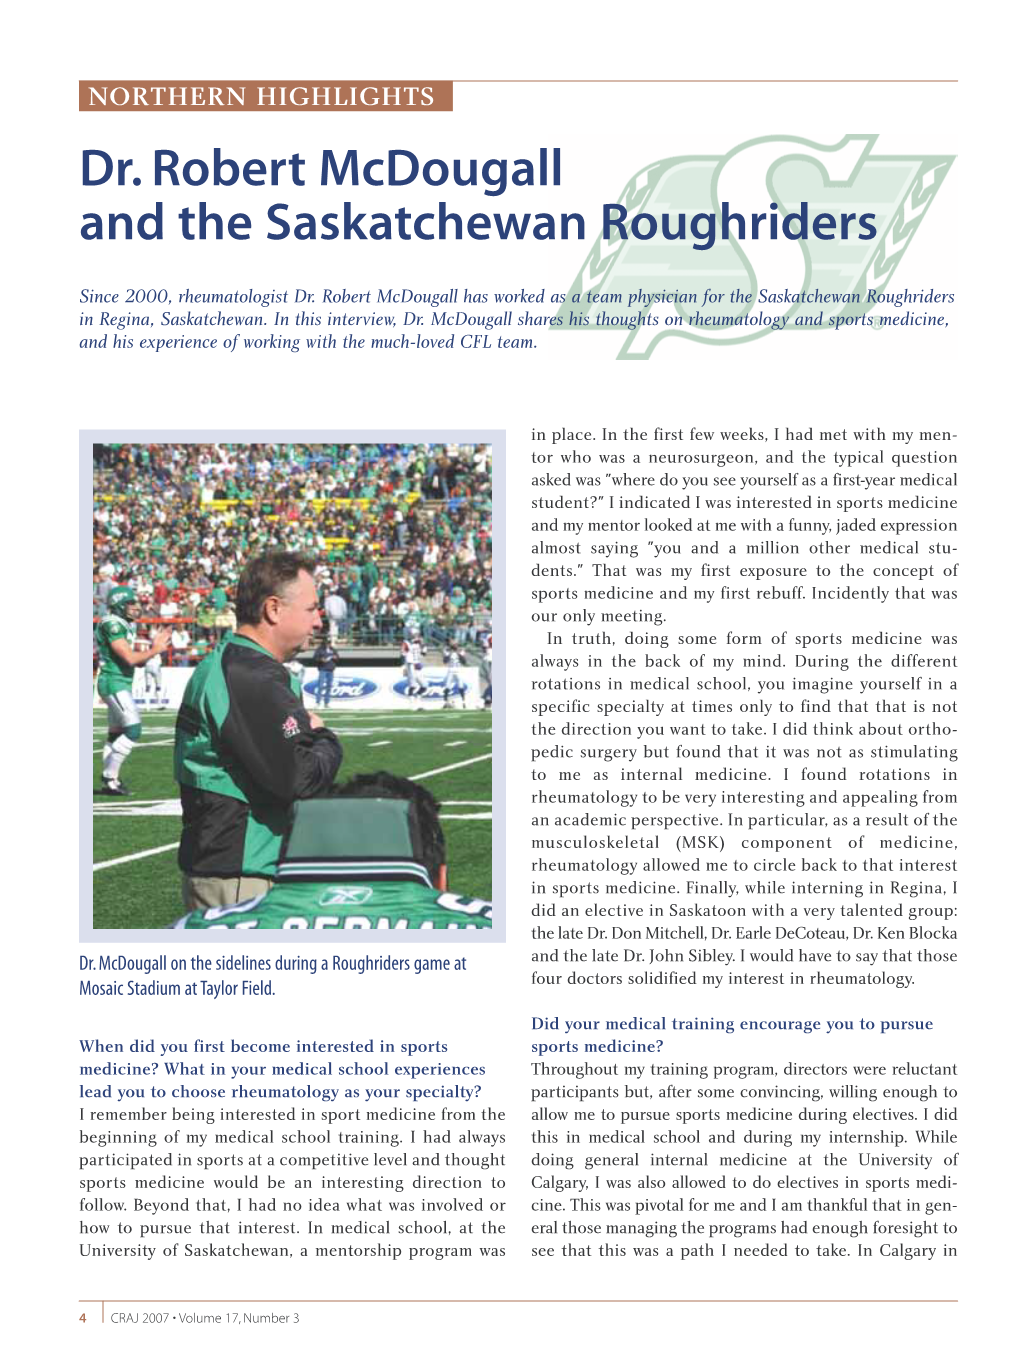 Dr. Robert Mcdougall and the Saskatchewan Roughriders